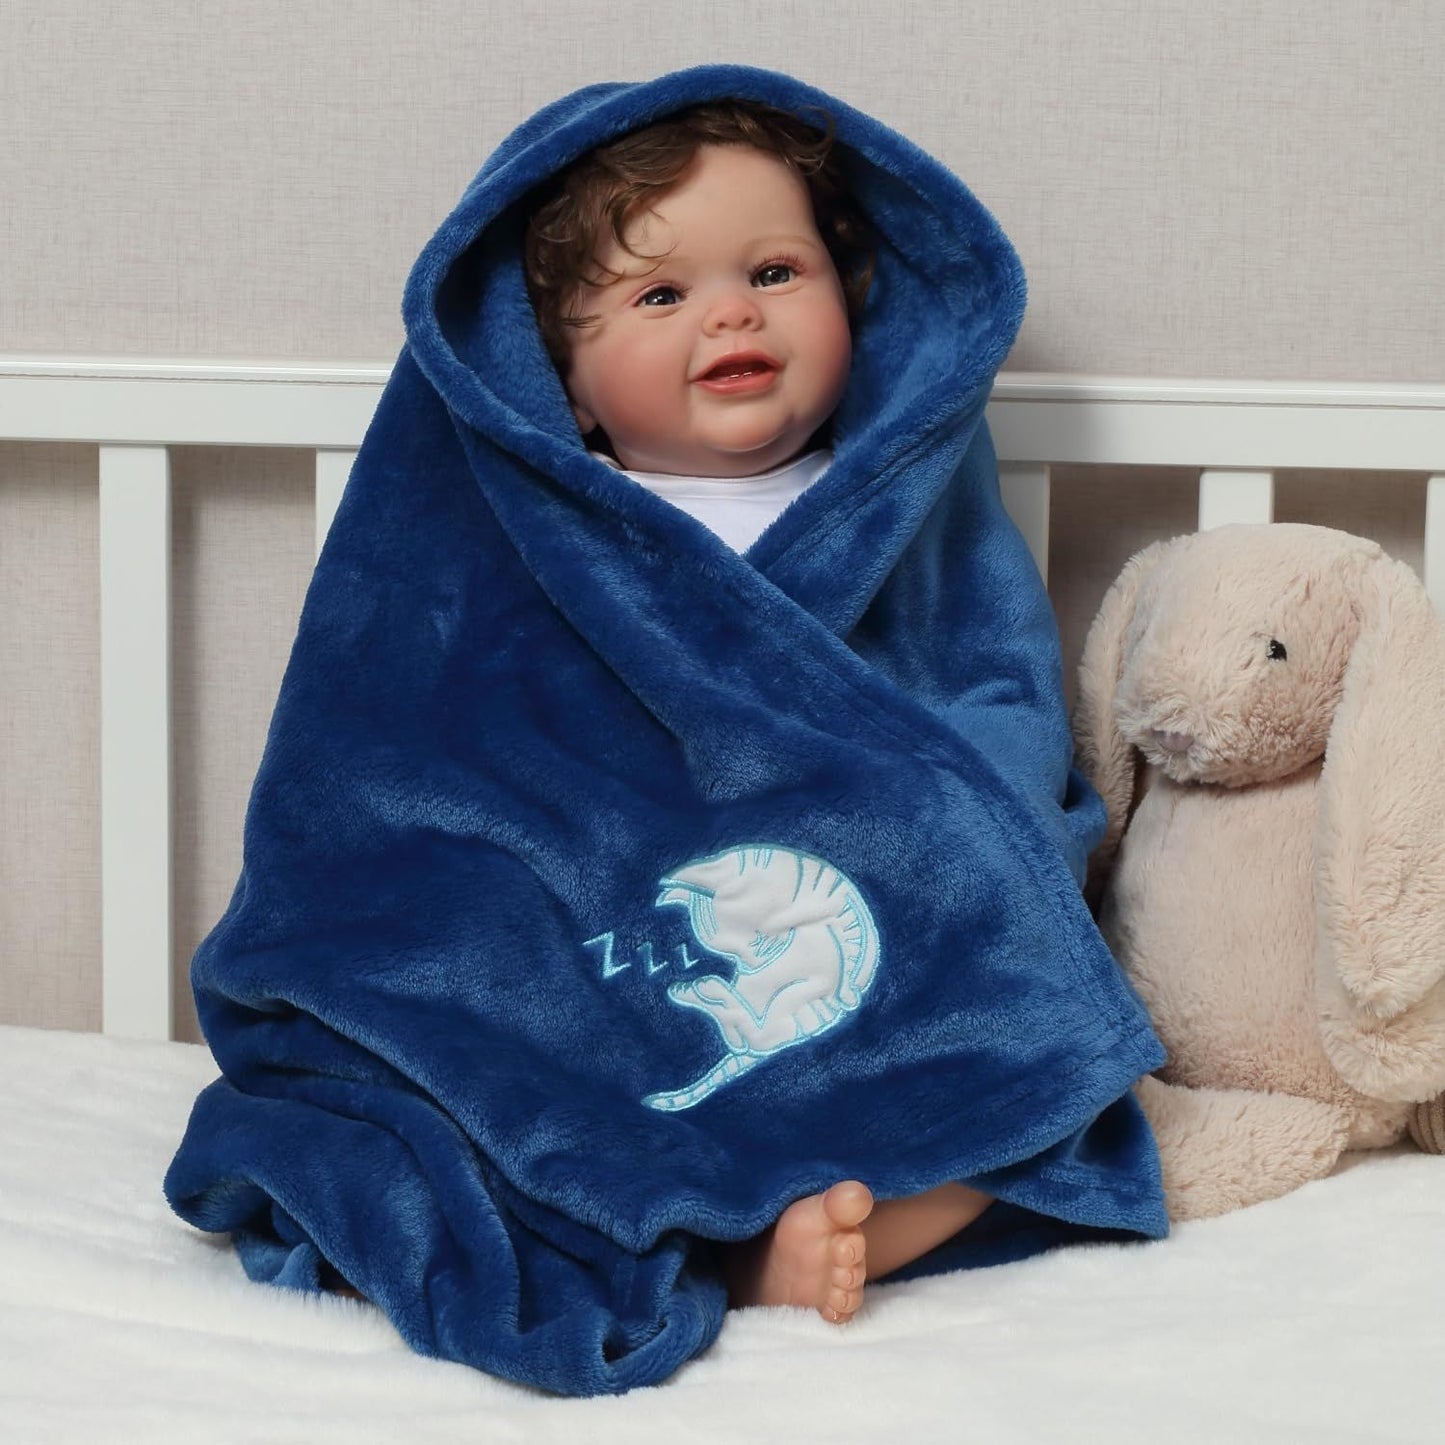 CREVENT 30"x40" Cozy Fluffy Warm Stroller Baby Blanket W/ Cat-For Boys & Girls